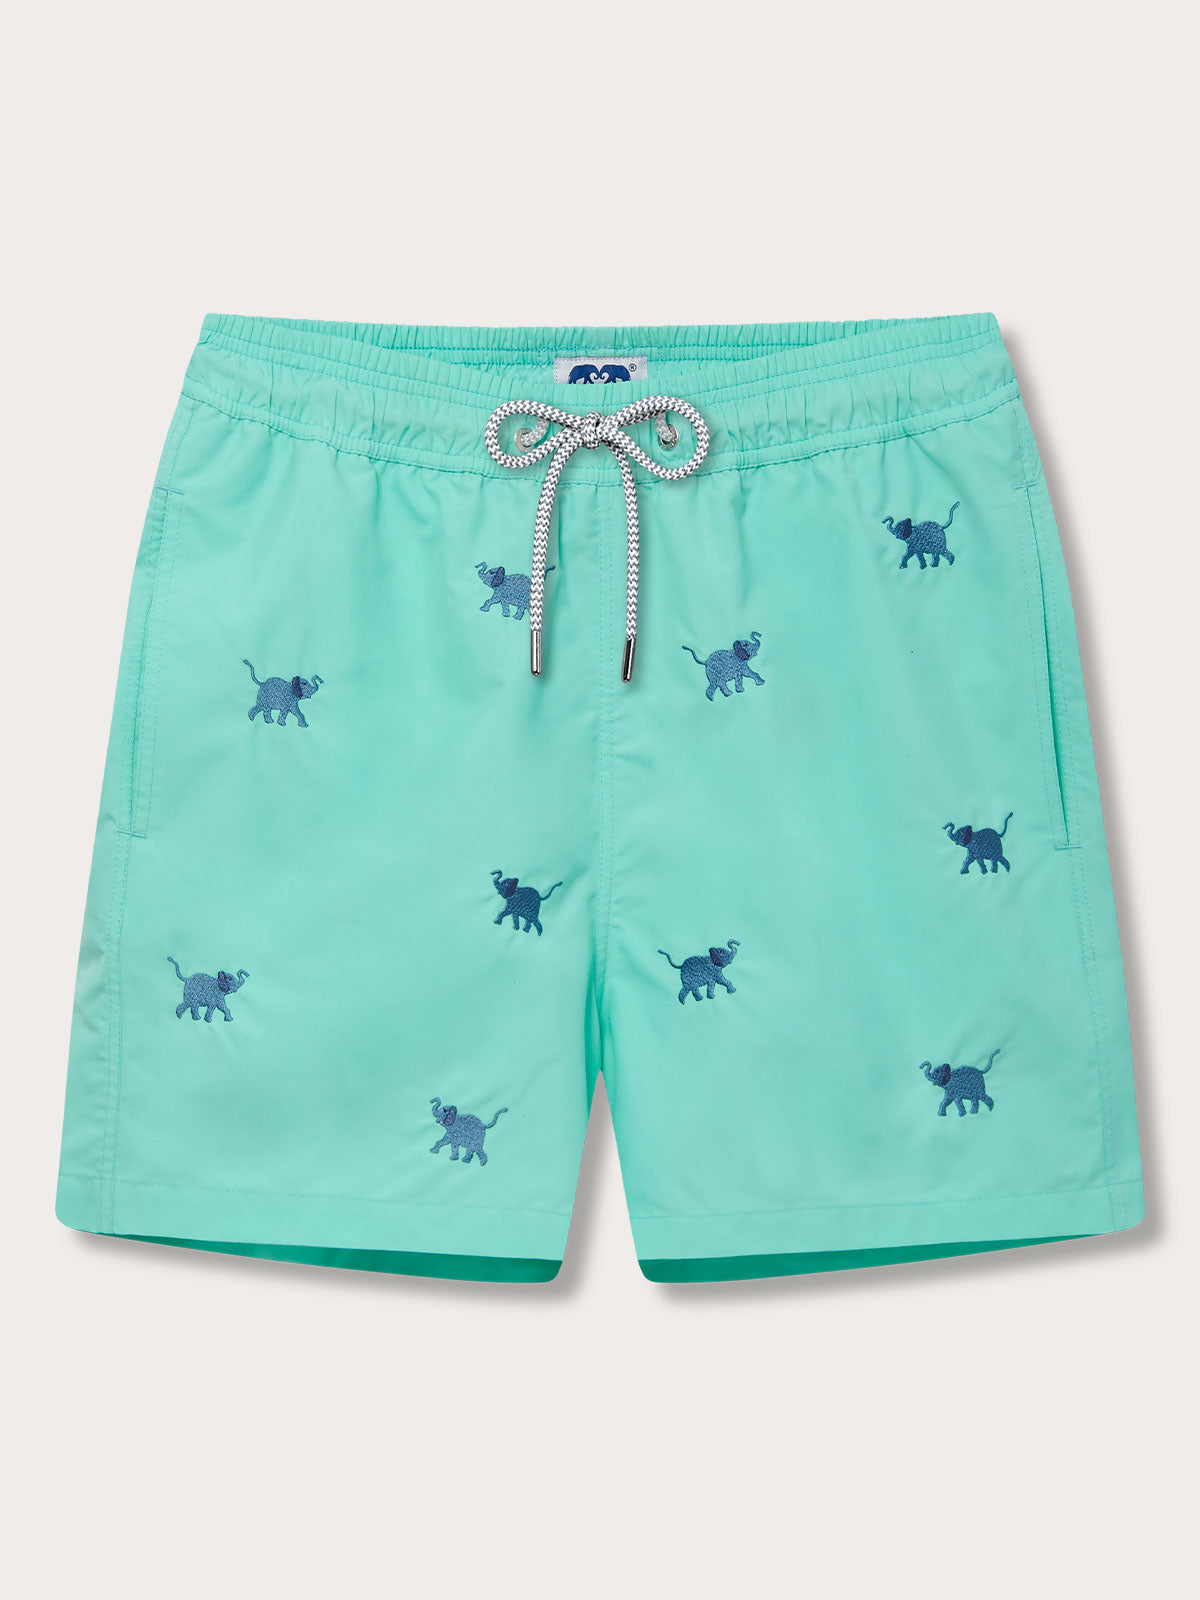 Men’s Elephants Galore Embroidered Staniel Swim Shorts